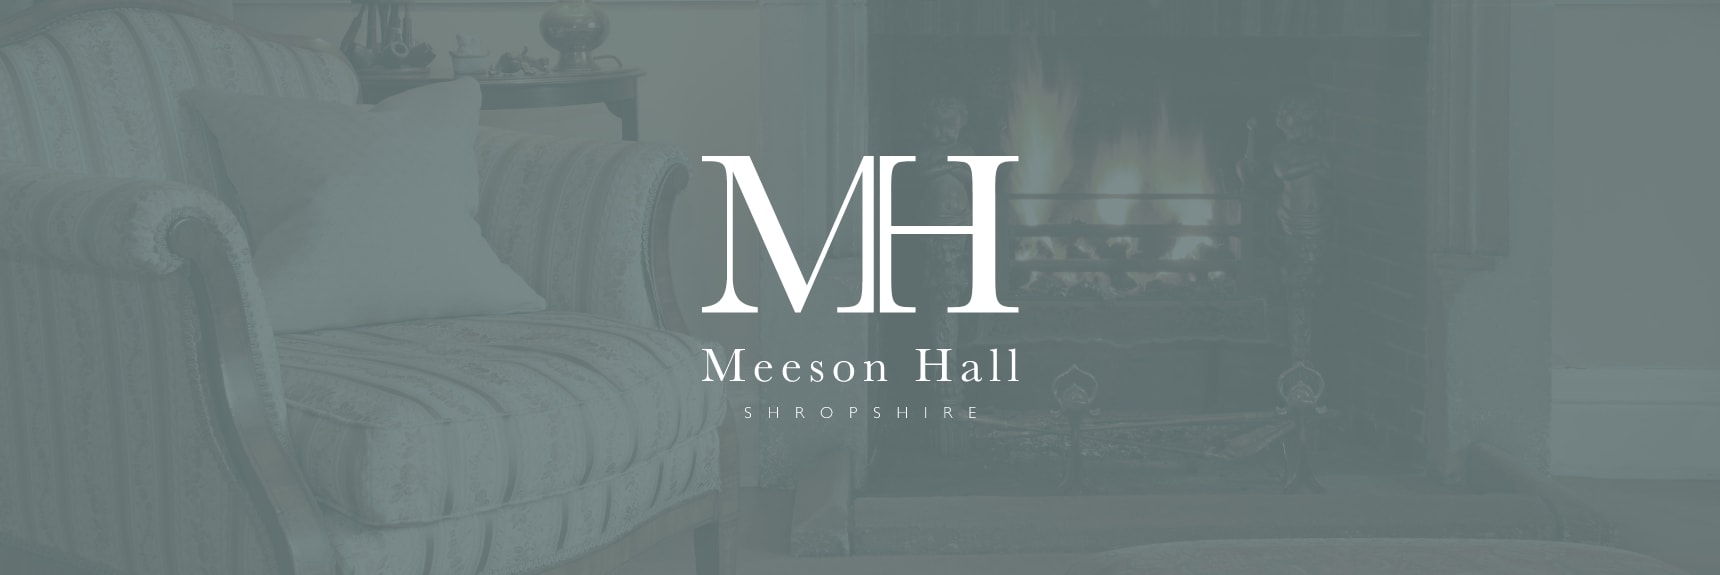 Meeson Hall